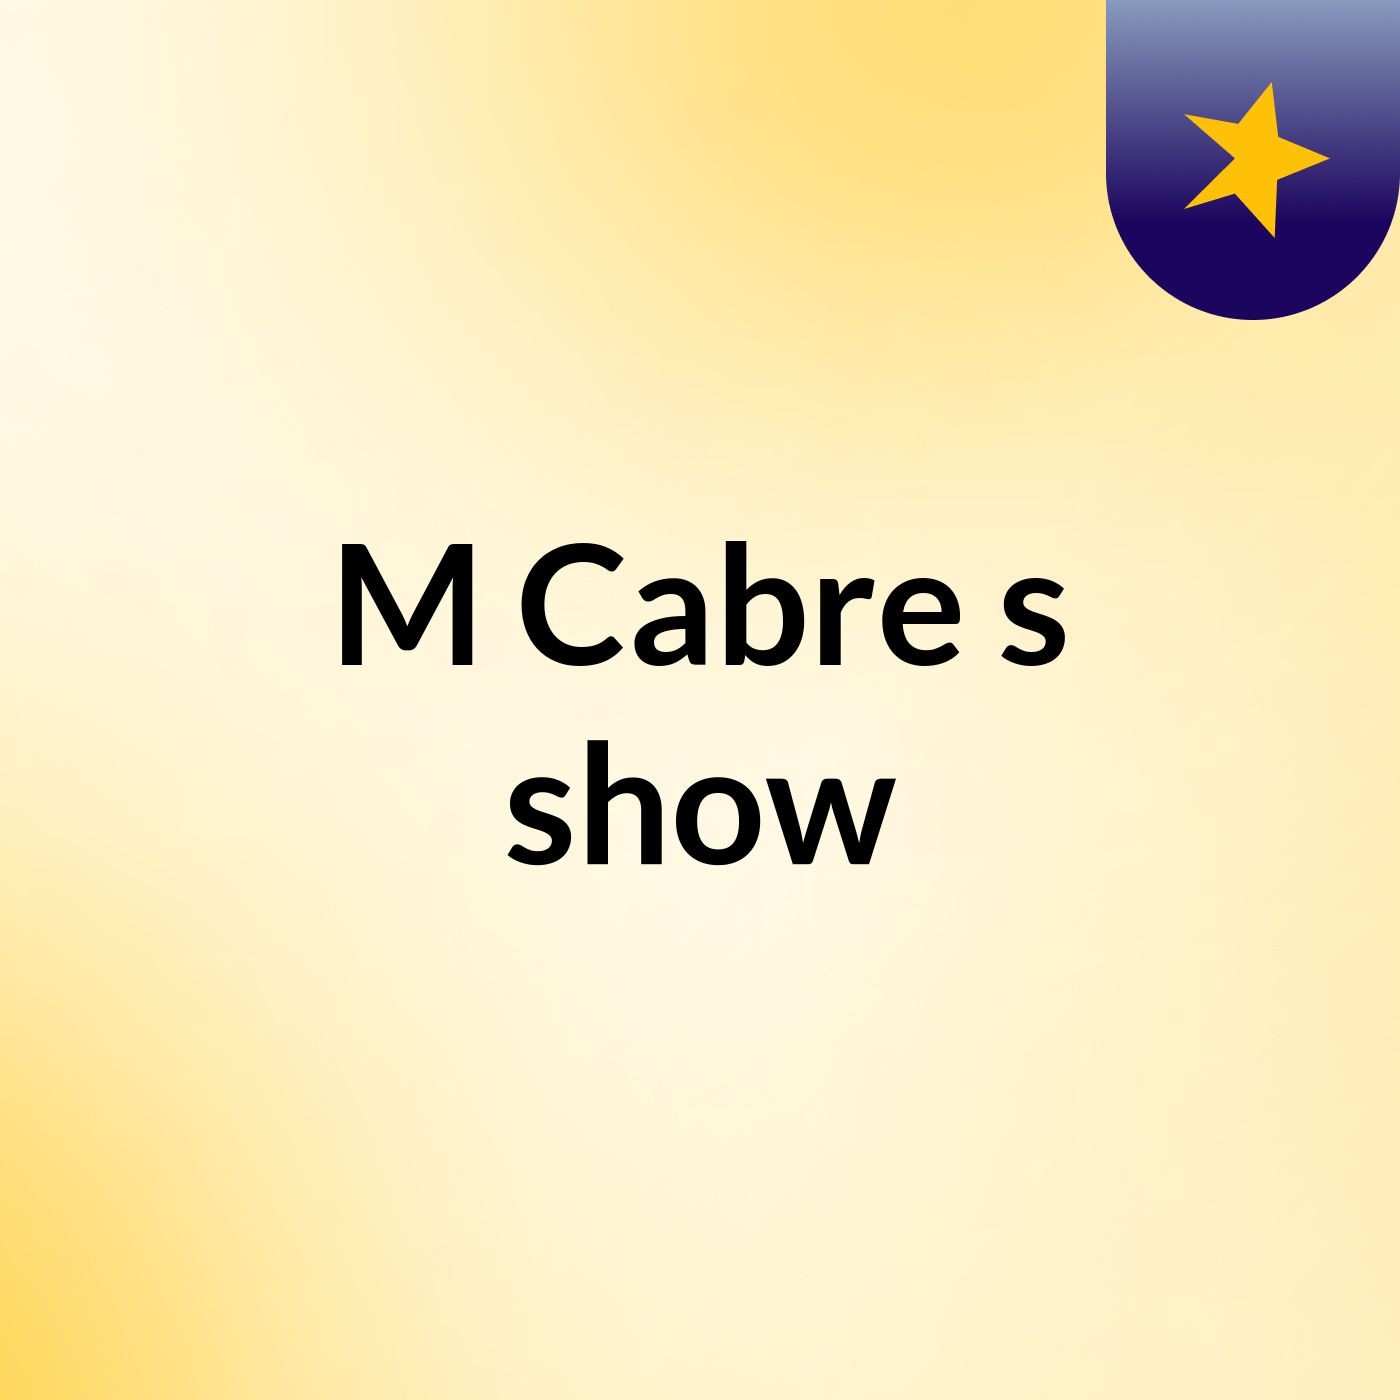 M Cabre's show